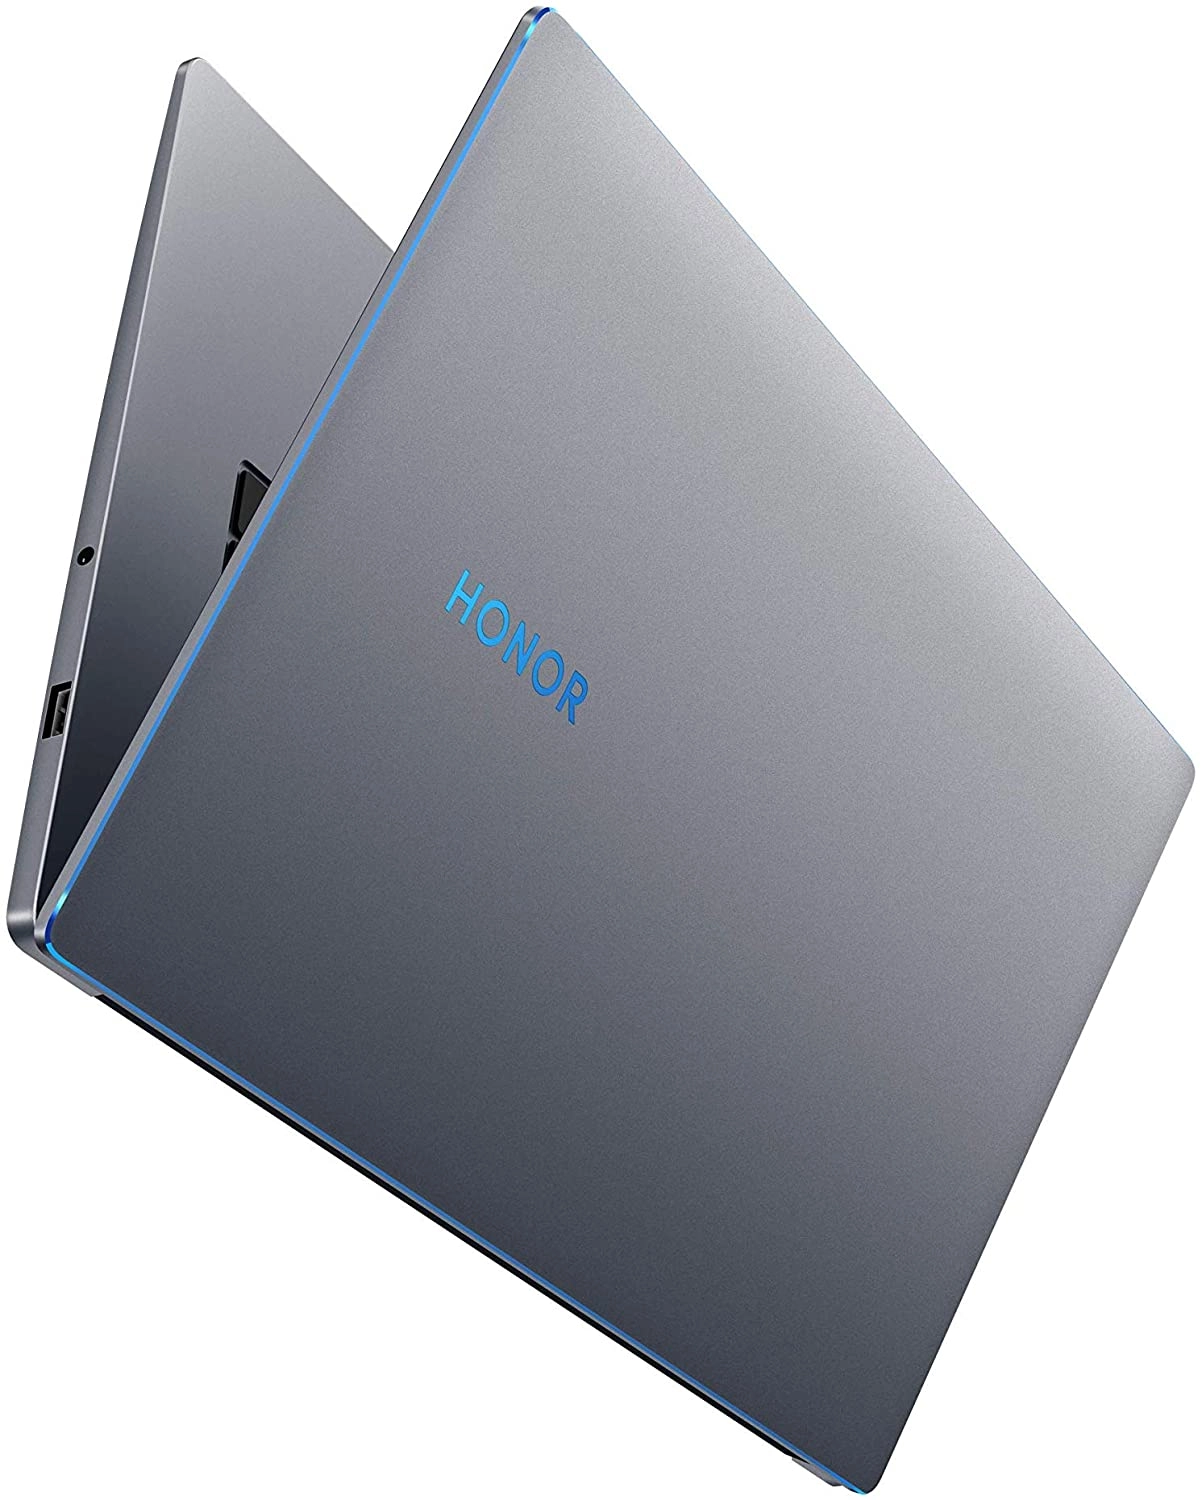 imagen portátil HONOR MagicBook 15 Space Grey 39cm Full HD IPS, Ryzen 5 3500U, 8GB RAM, 256GB SSD